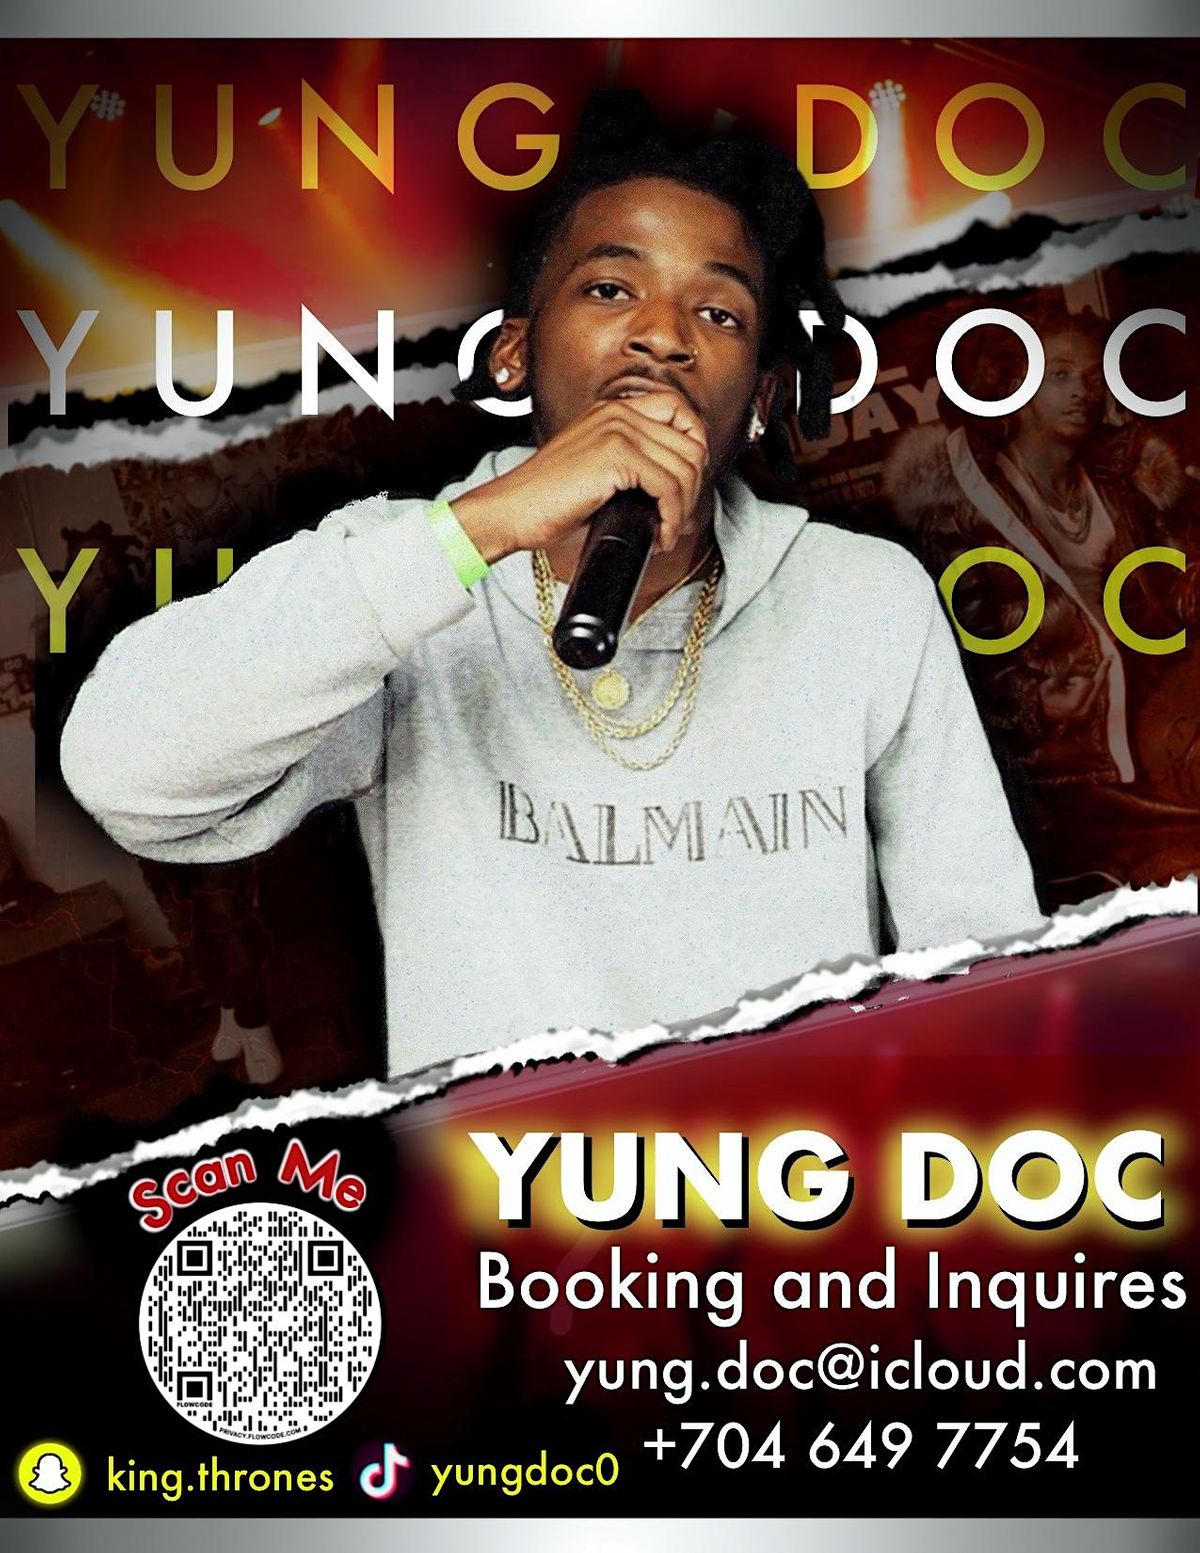 Yung Doc's Album Release